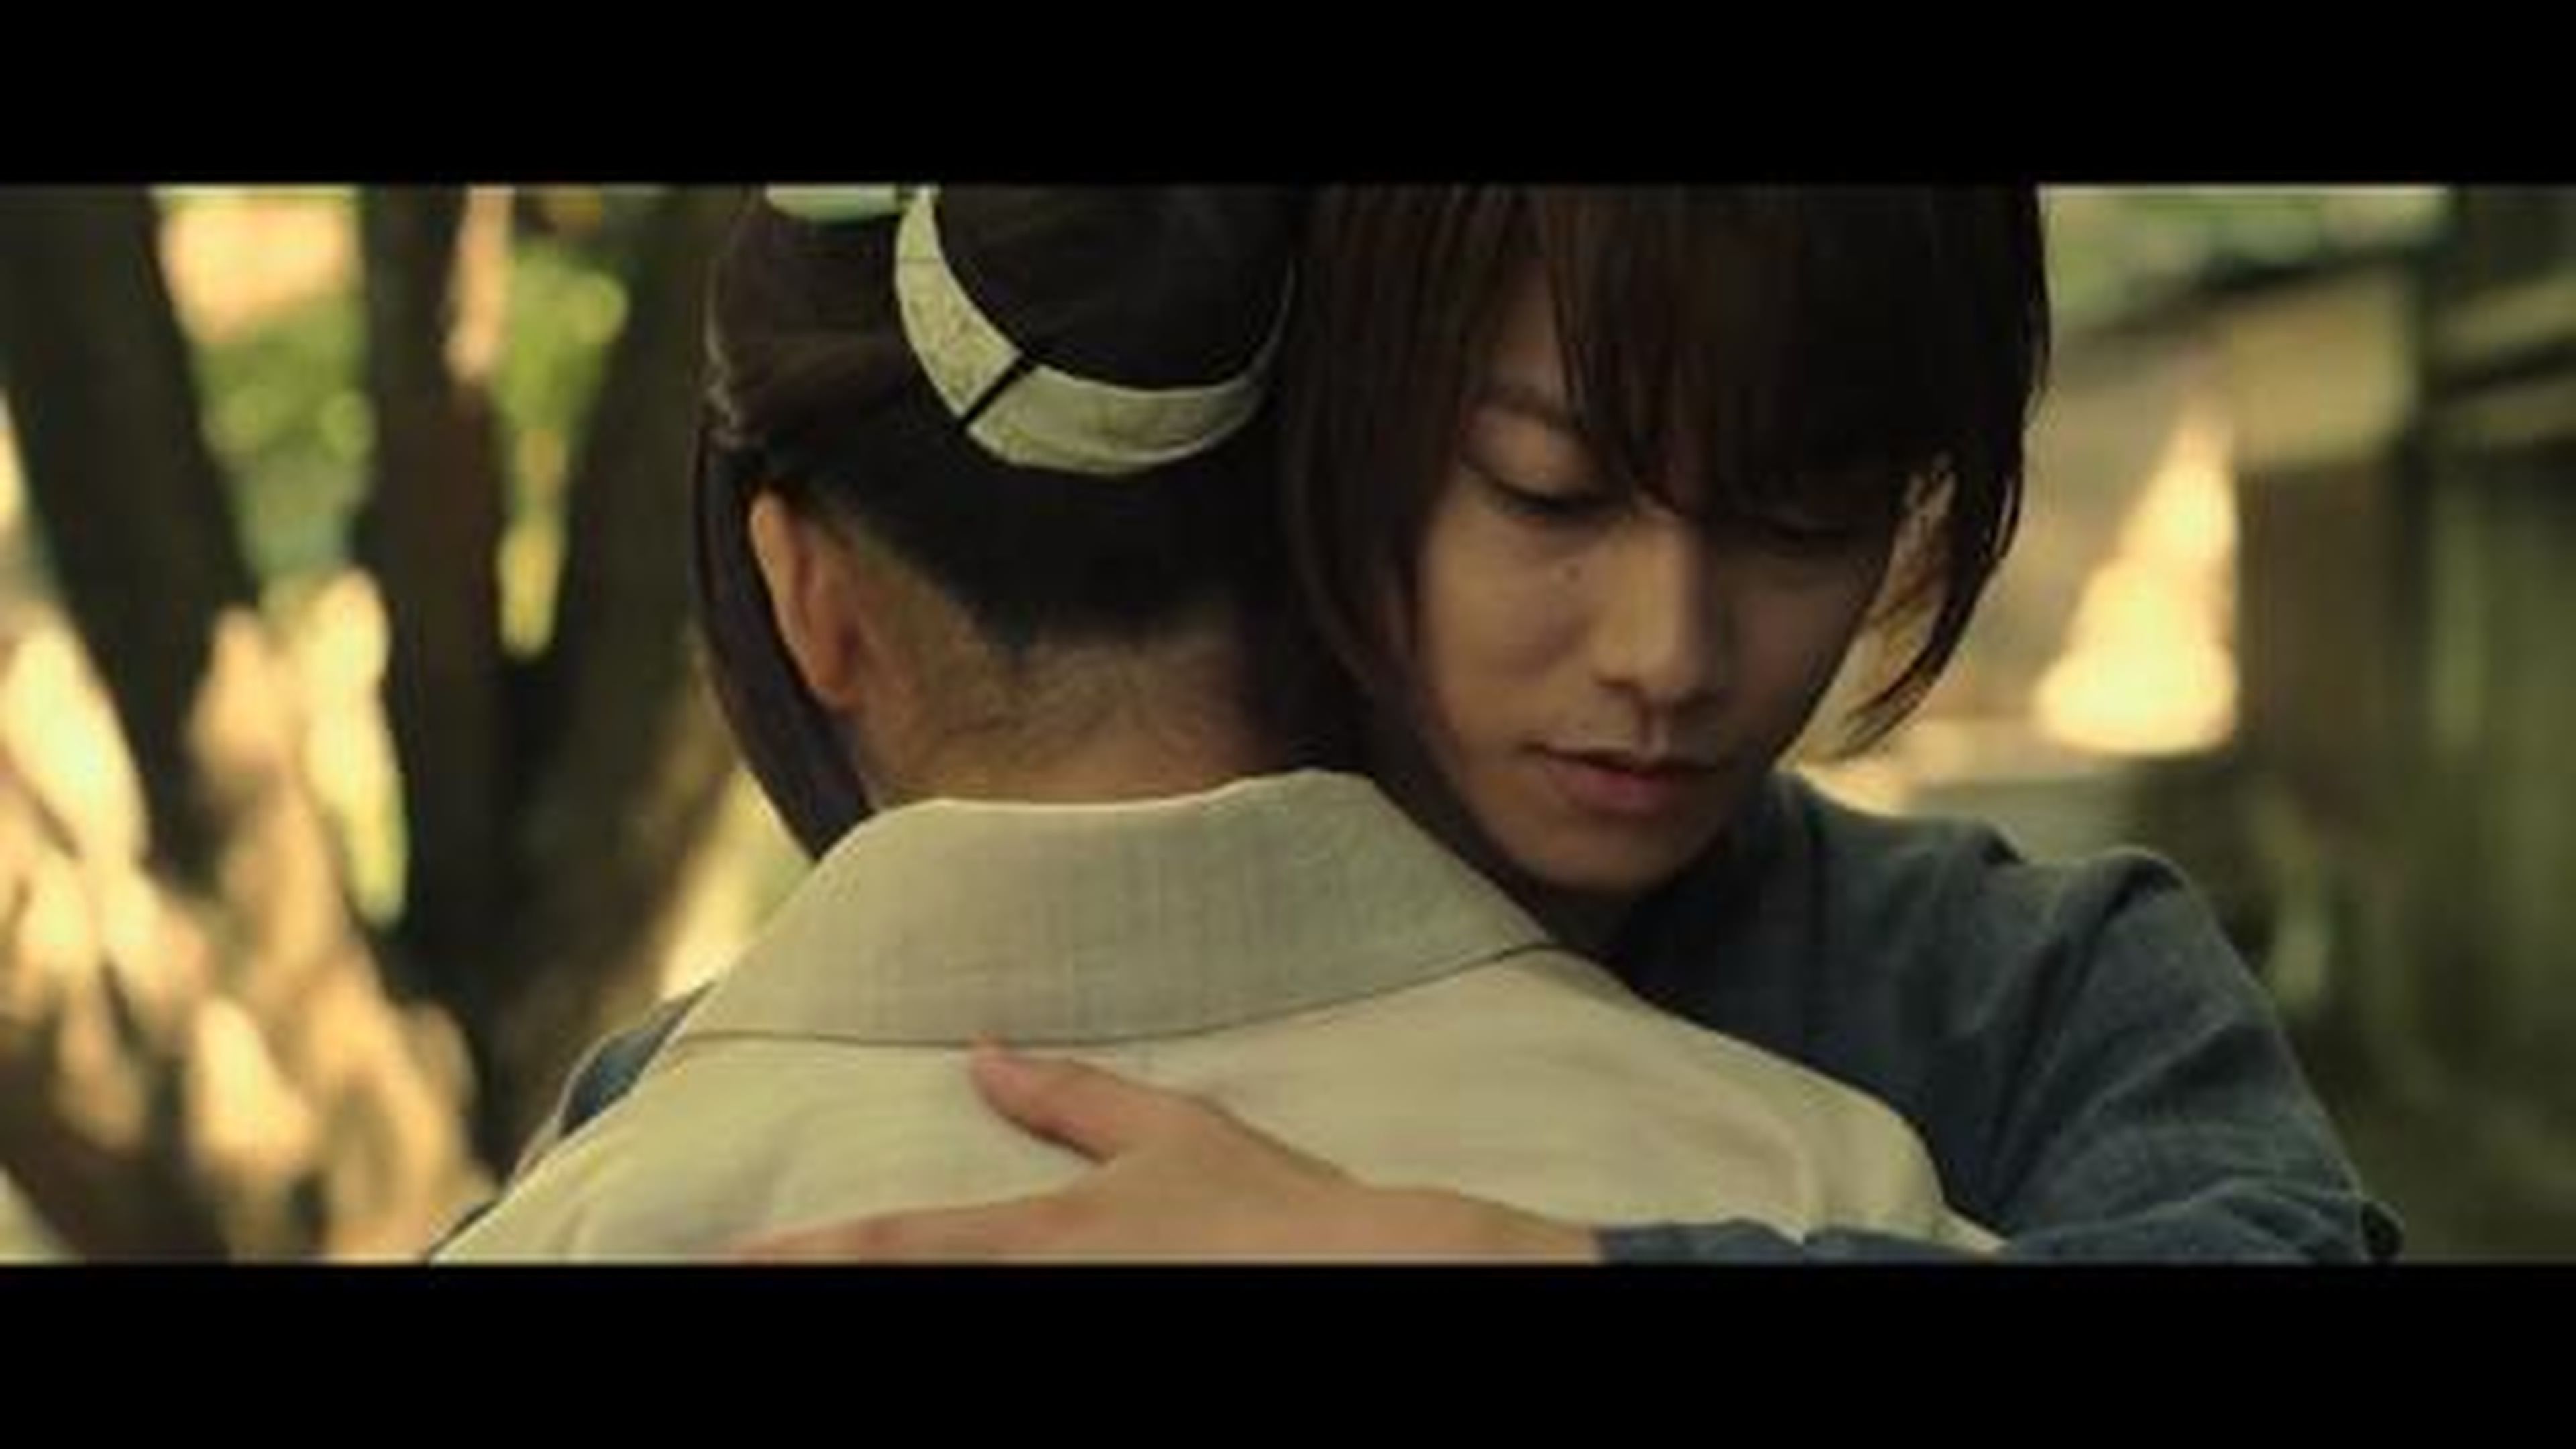 『Rurouni Kenshin: Kyoto Inferno - The Legend Ends』 Teaser trailer (English)